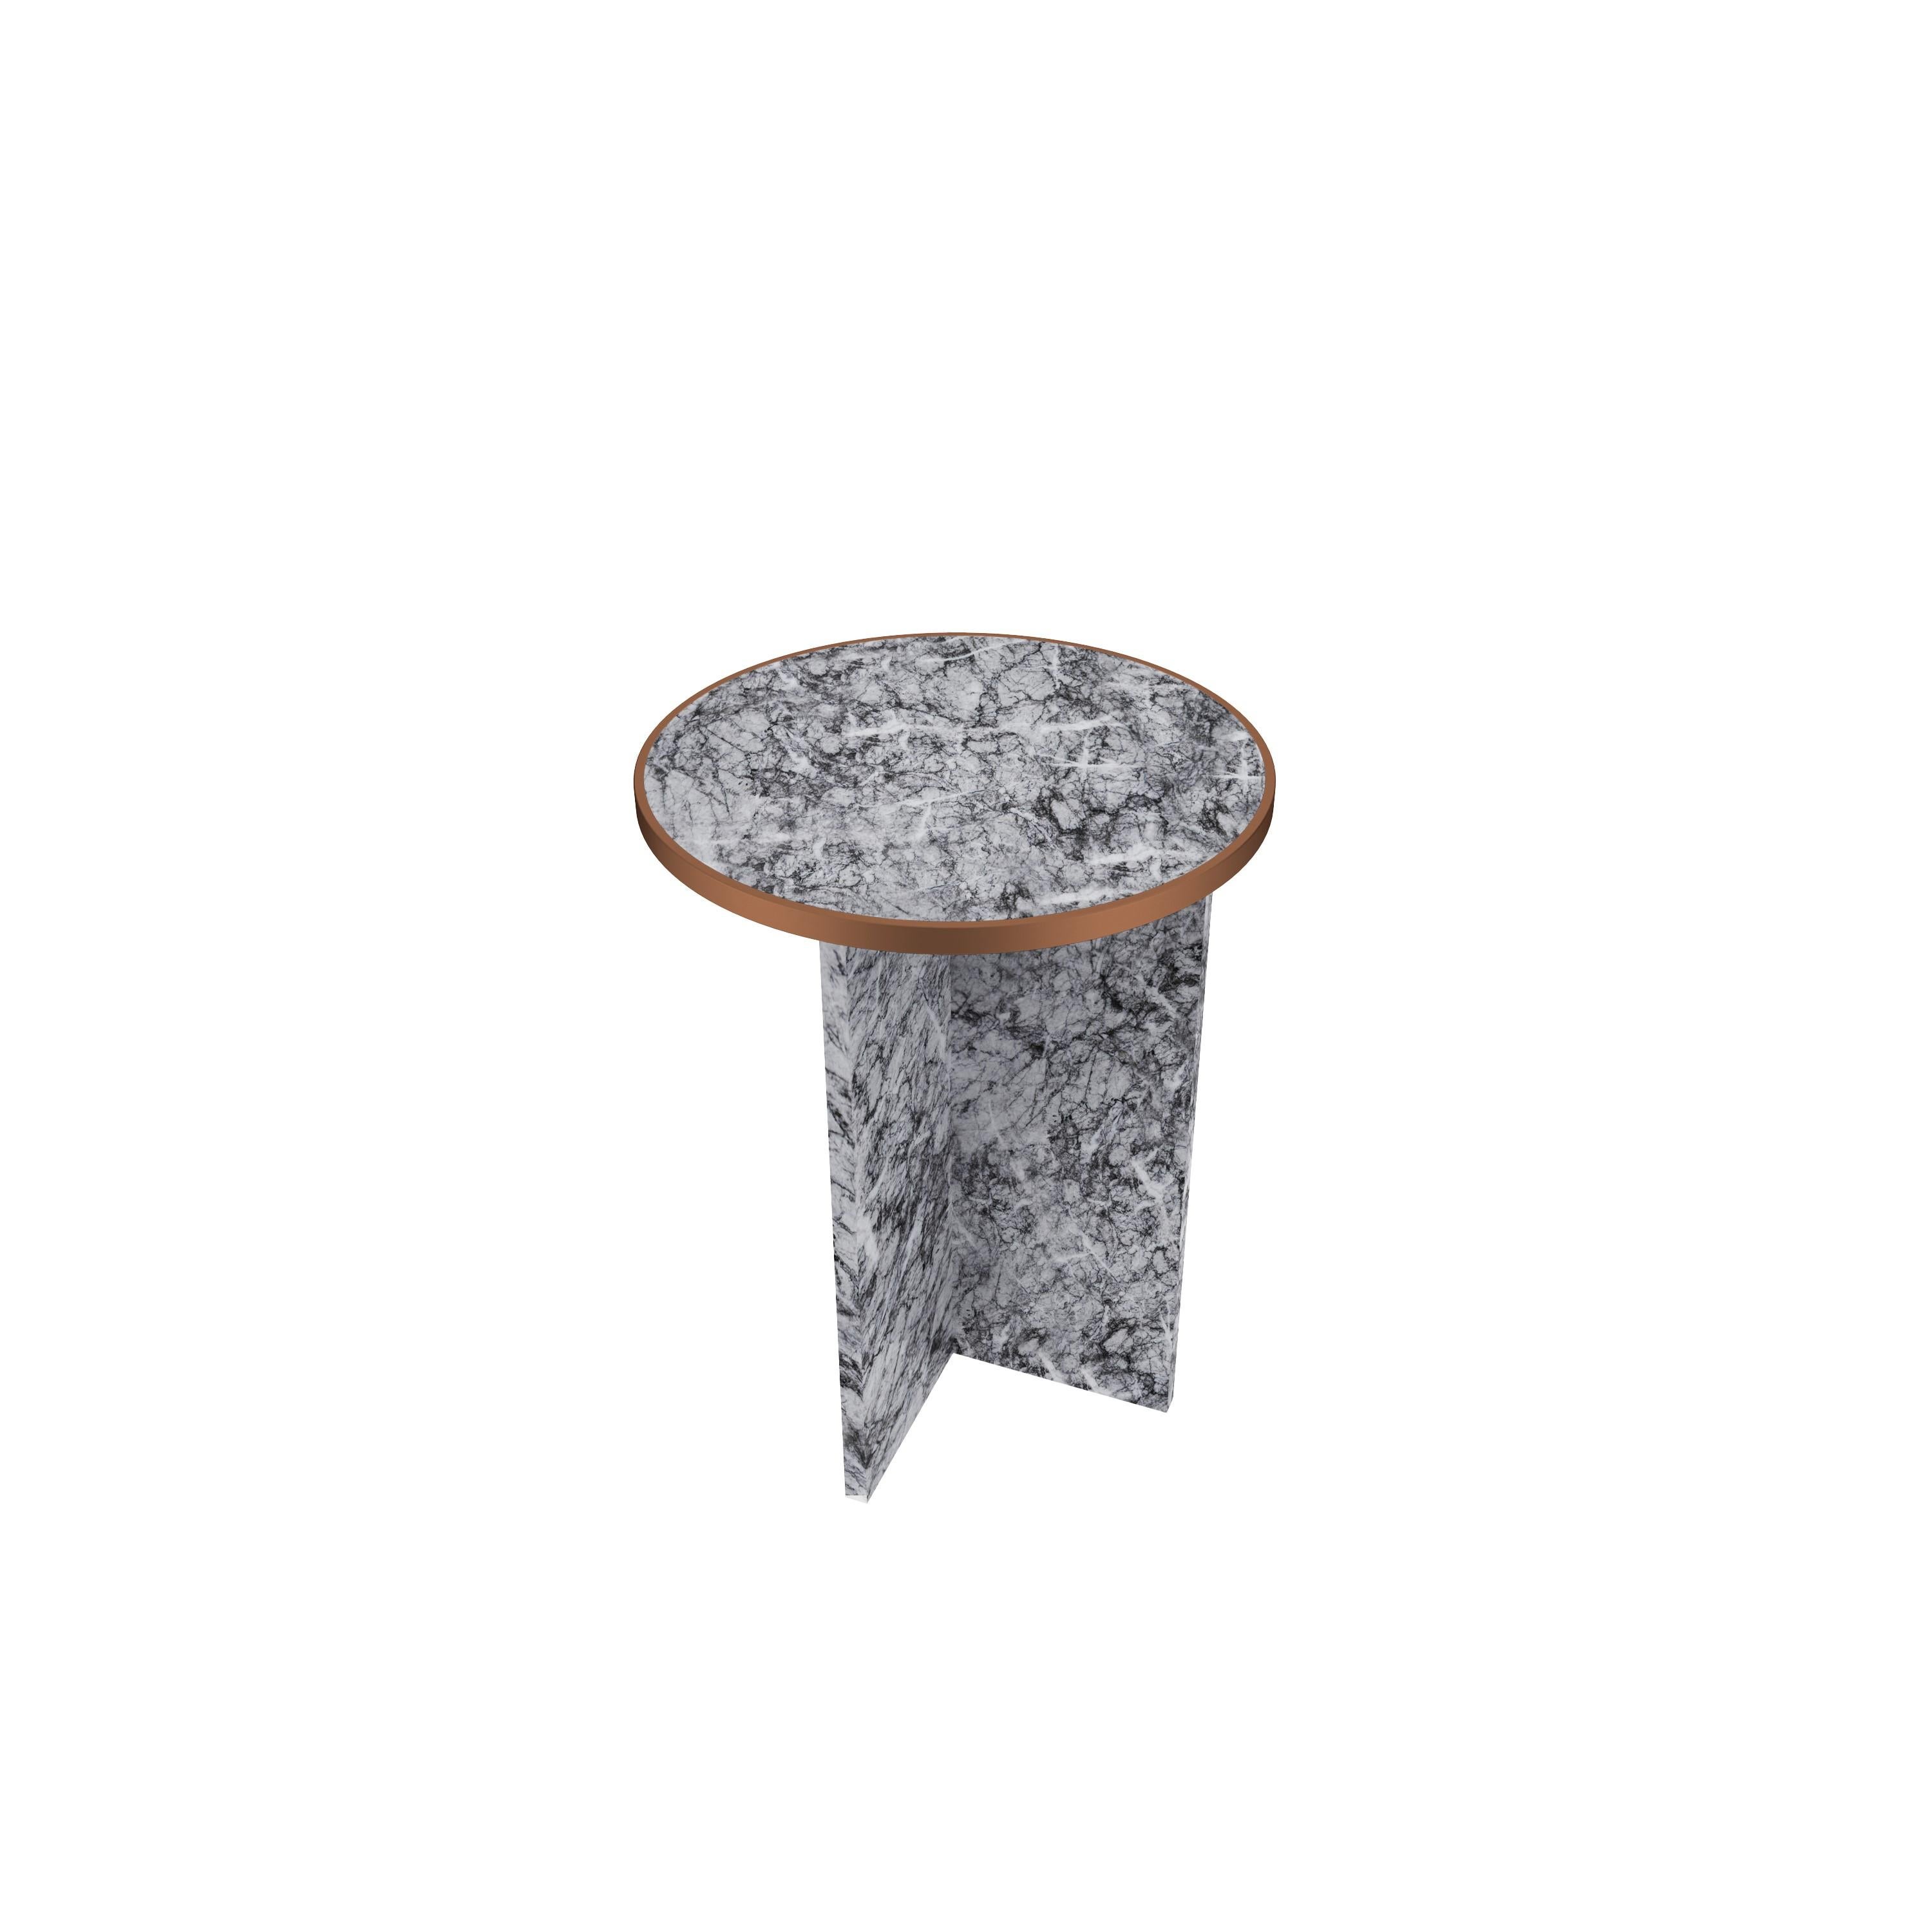 Scandinavian Modern NORDST T-Round Side Table, Italian White Mountain Marble, Danish Modern Design For Sale